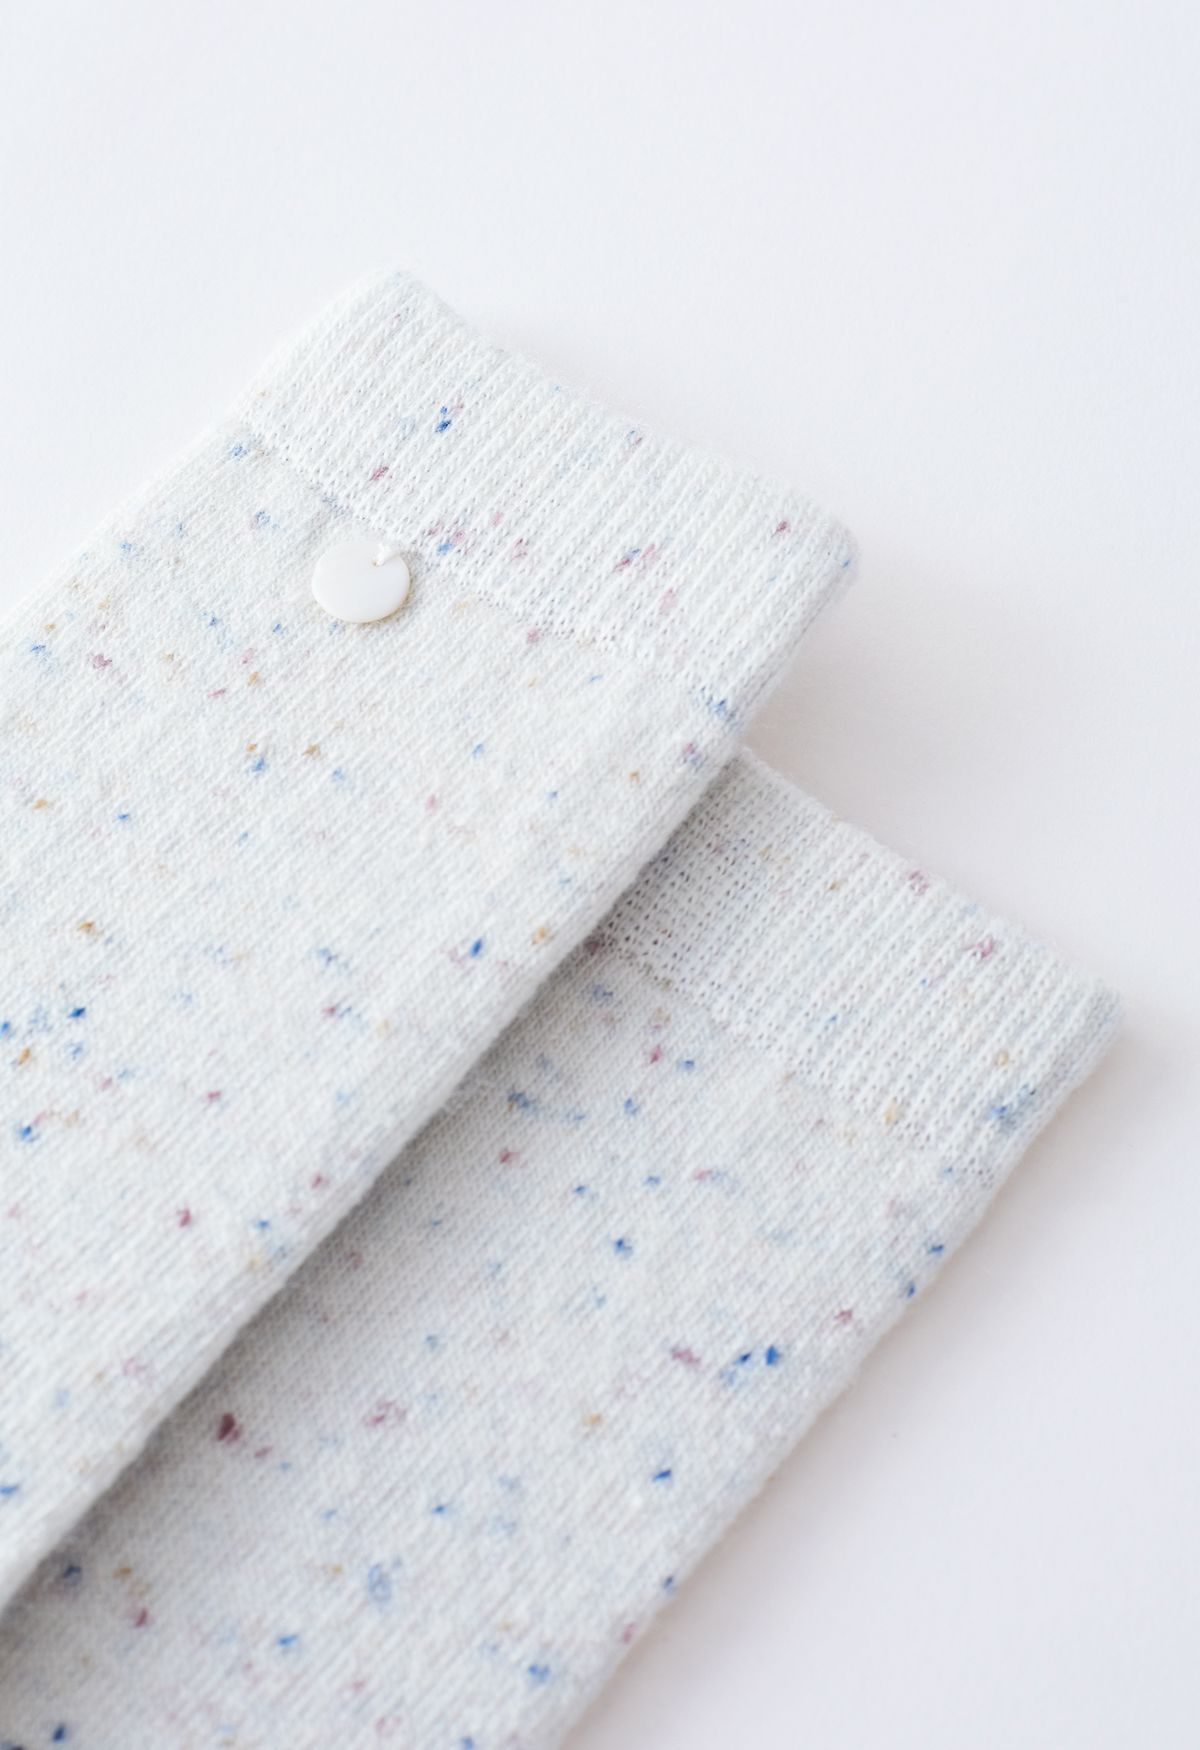 Mix Color Dots Crew-Socken aus Wollmischung in Creme